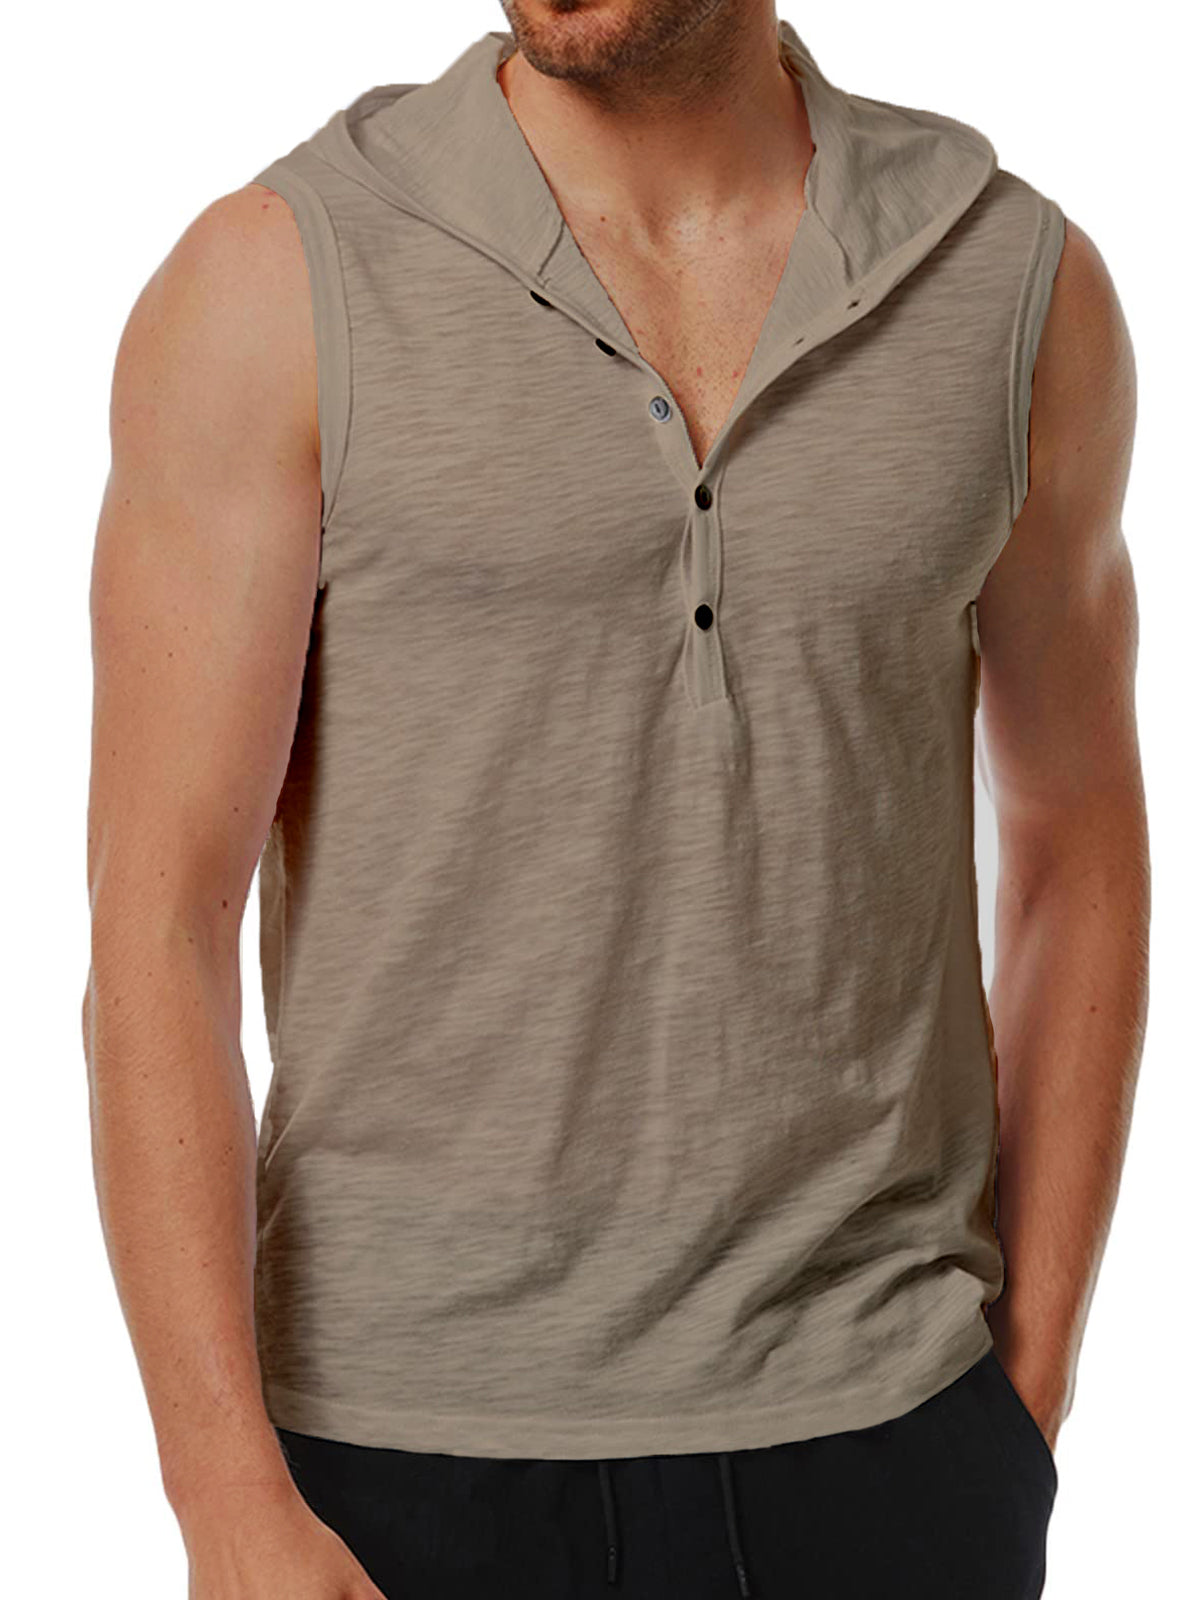 Men's Hooded Casual Fashion Sleeveless Bamboo Cotton T-shirt